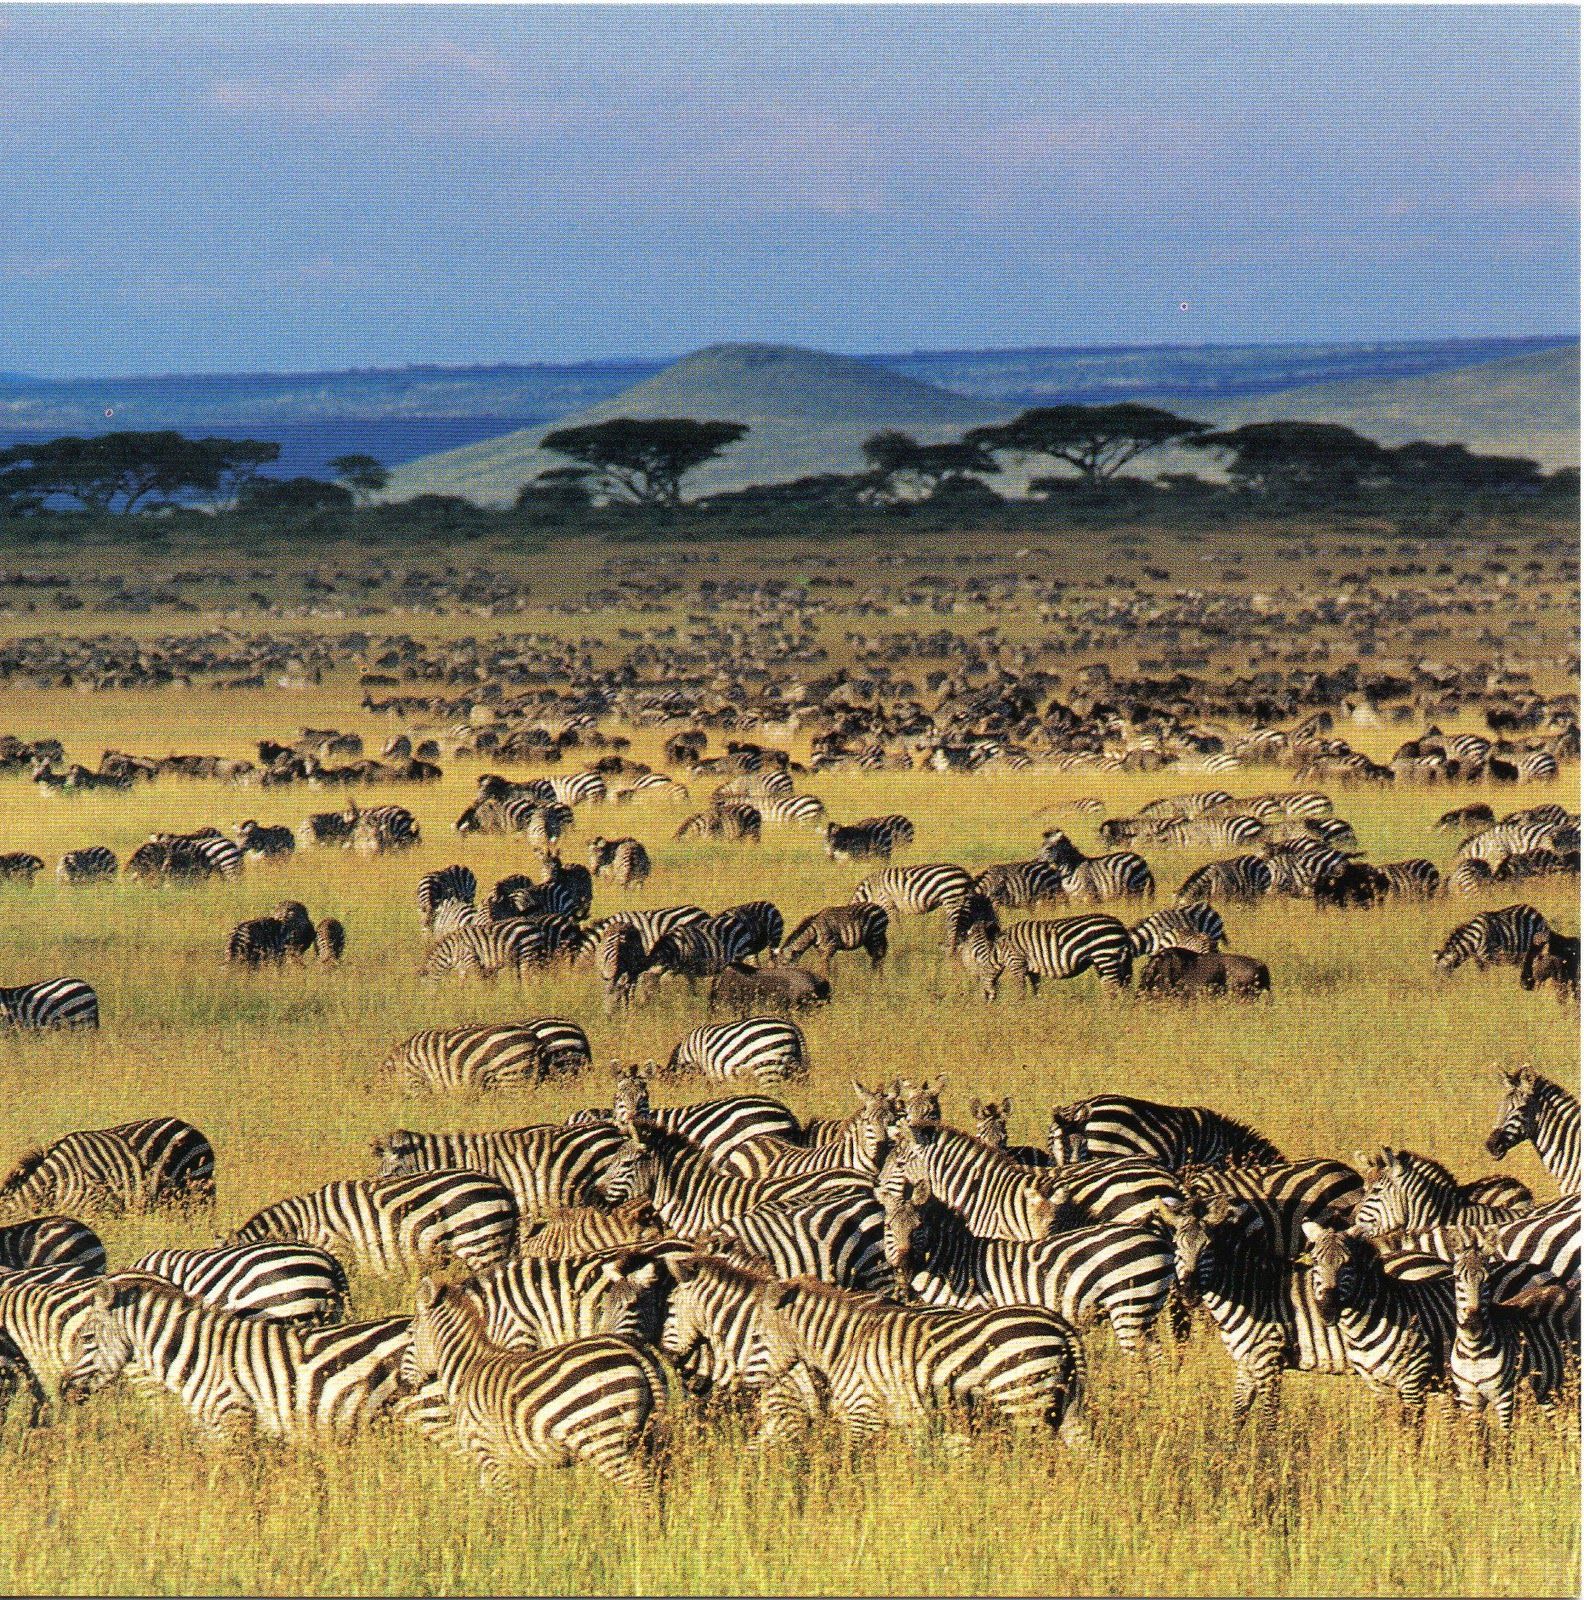 A three days Tour to Serengeti National Park, Ngorongoro Conservation Area and the Hadzabe Land